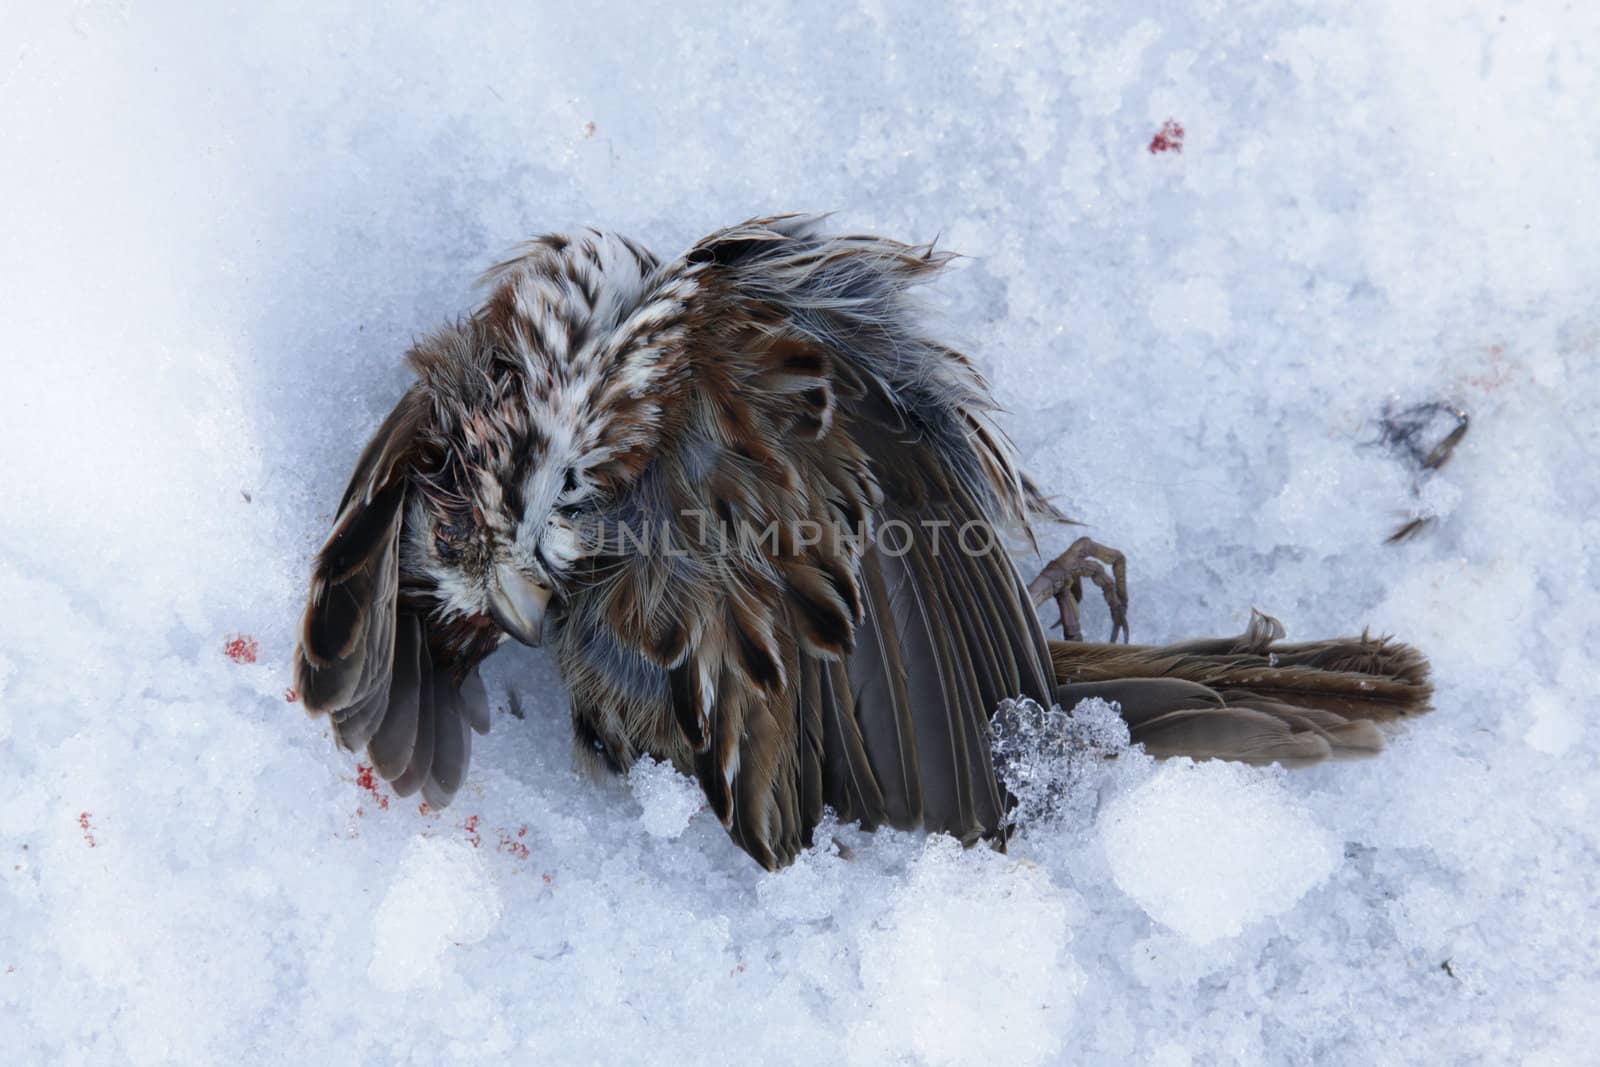 A dead song sparrow in the snow.